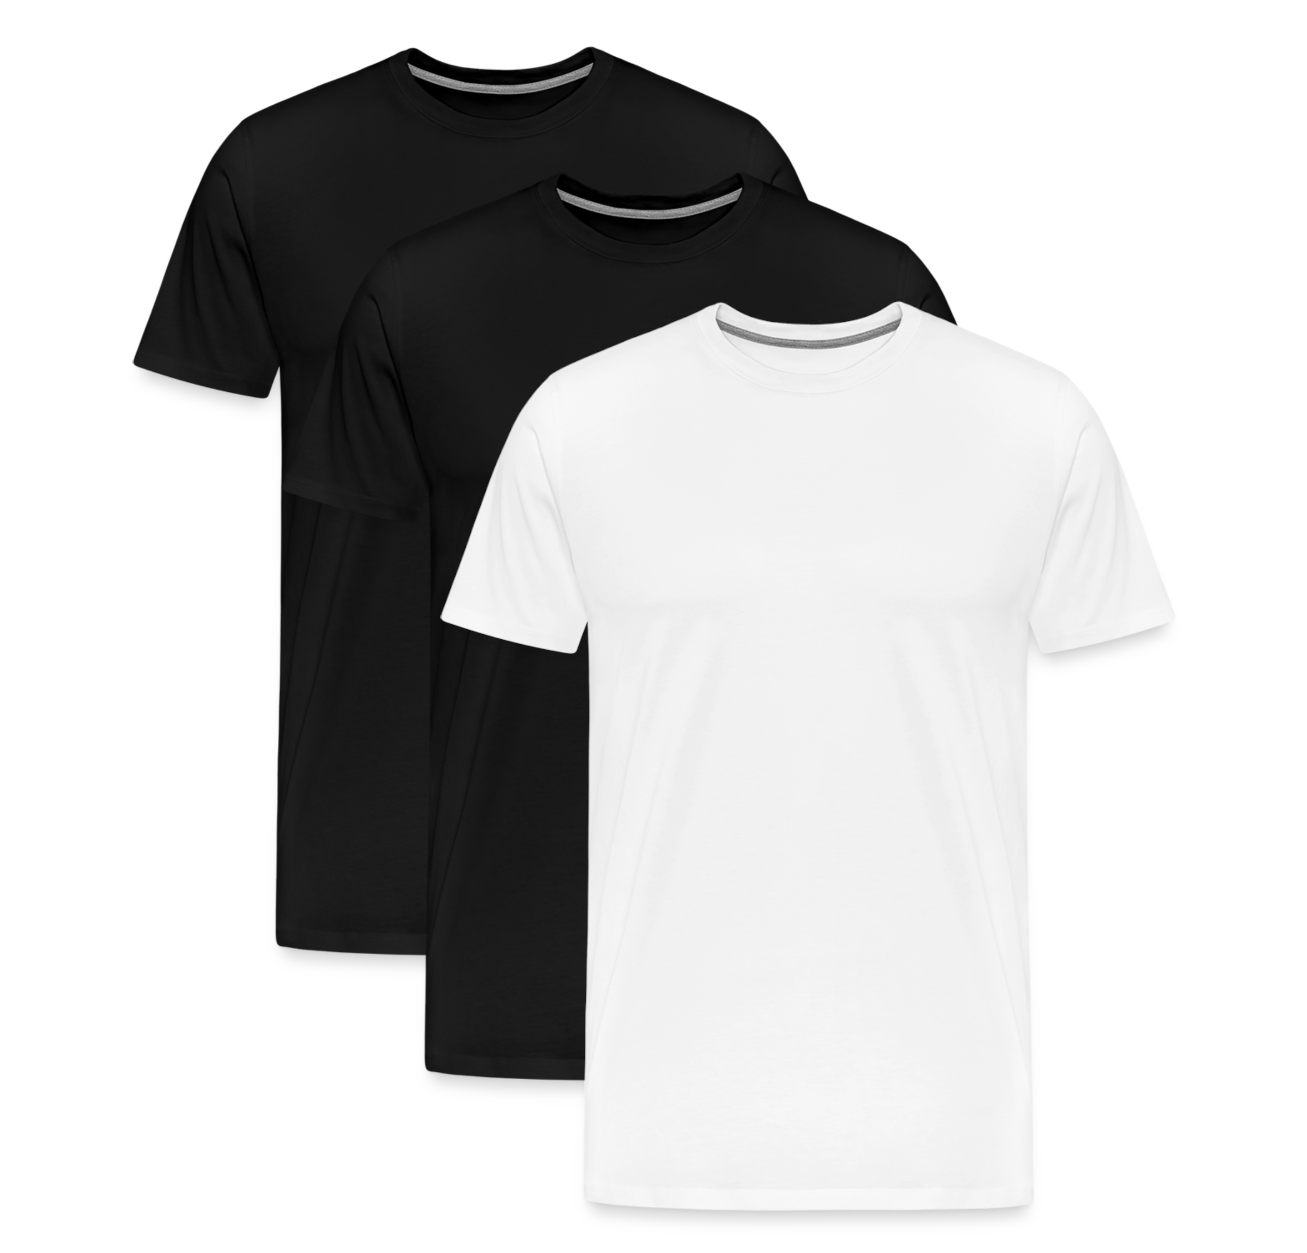 Fluent Tee Variety 3-Pack (Size 4XL) - Men's Premium T-Shirt from fluentclothing.com